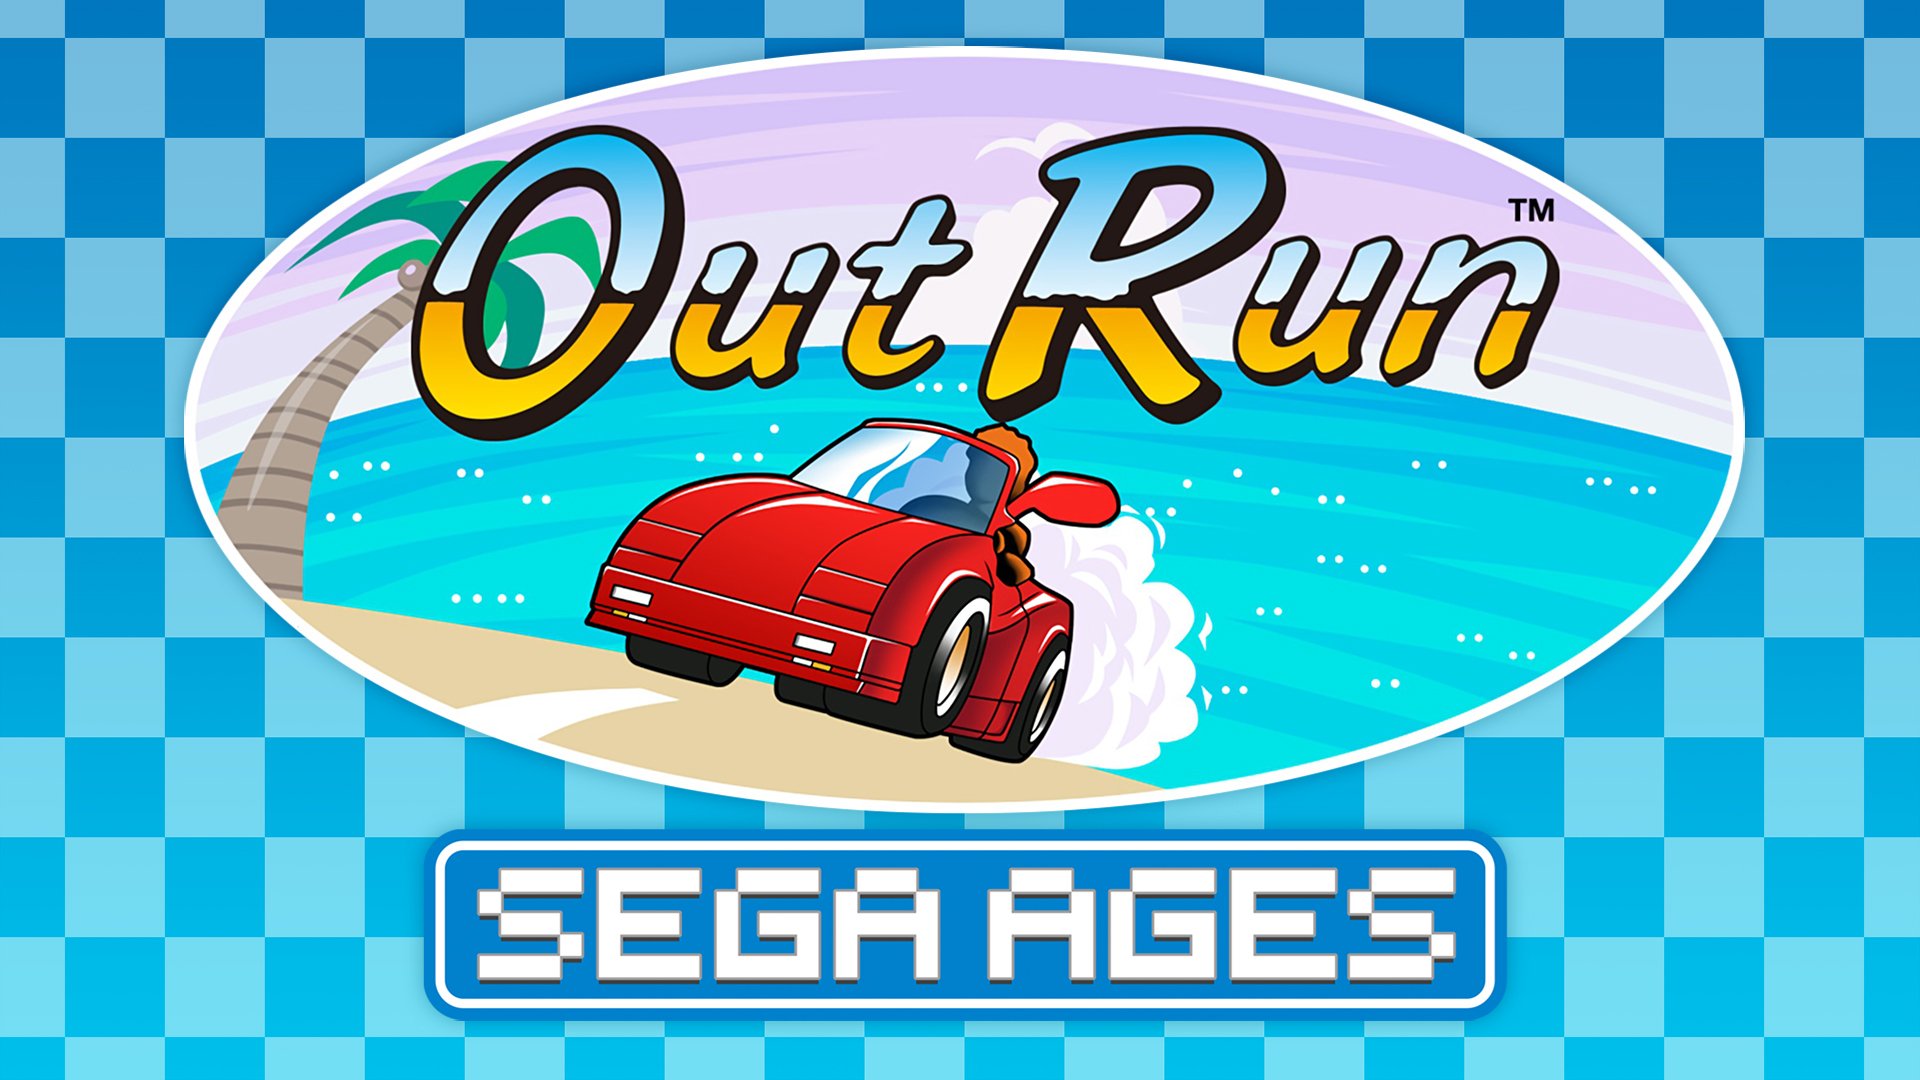 Sega Ages Out Run